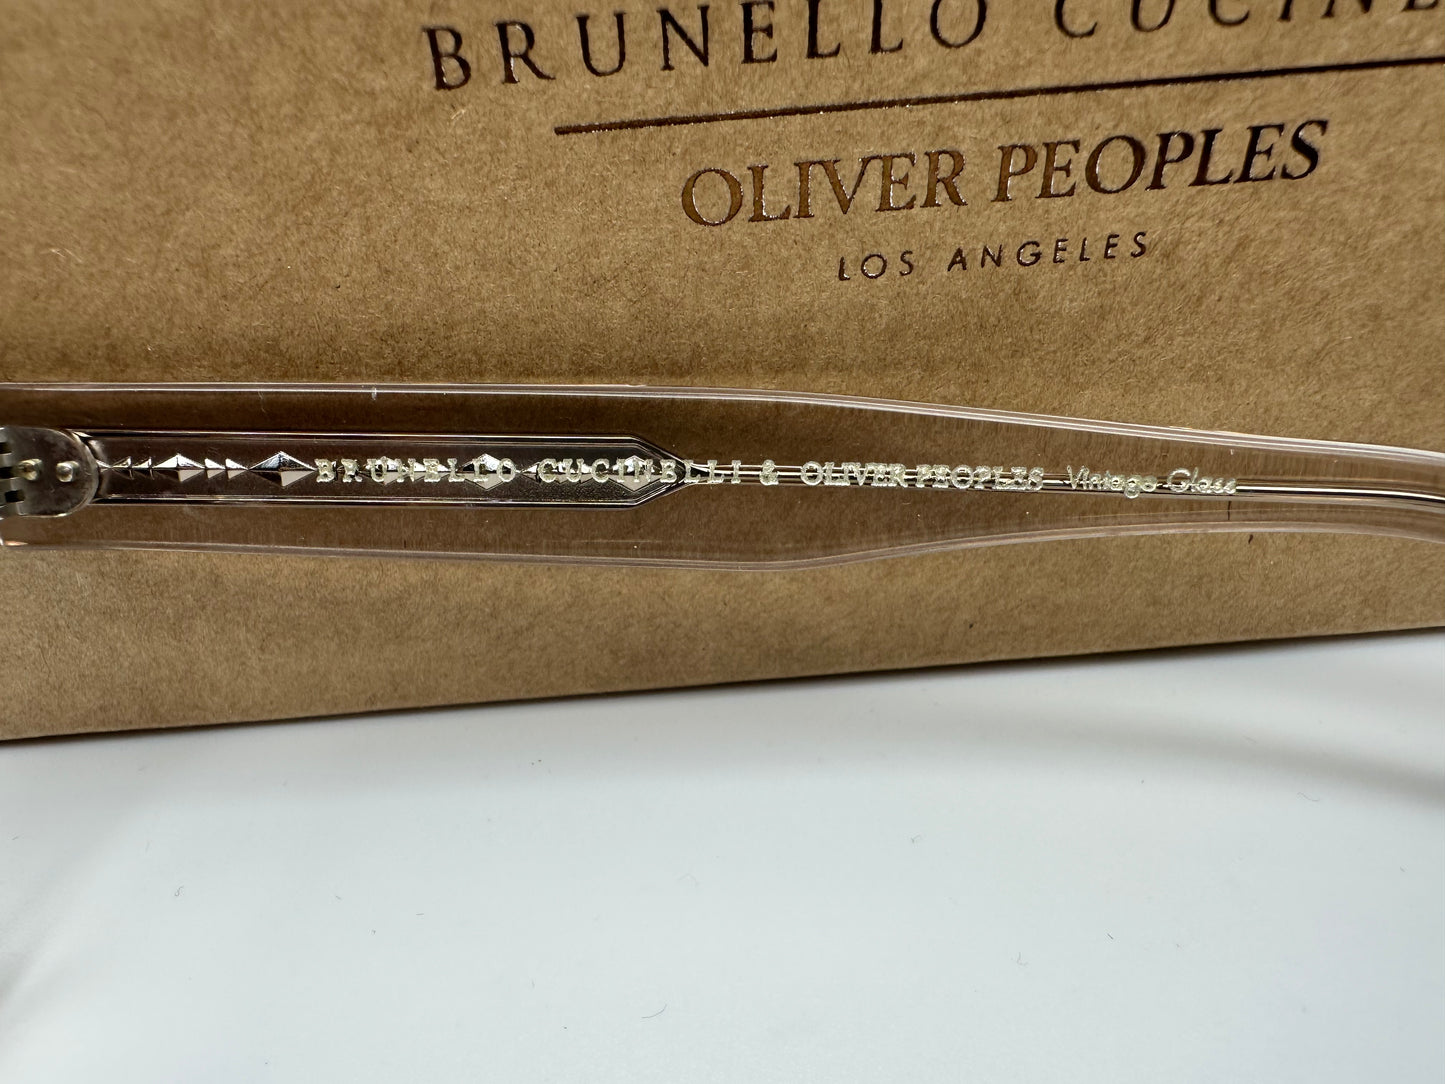 Oliver Peoples Oliver Sun 51mm Dune Shale Gradient Brunello Cucinelli OV 5393SU Italy NEW